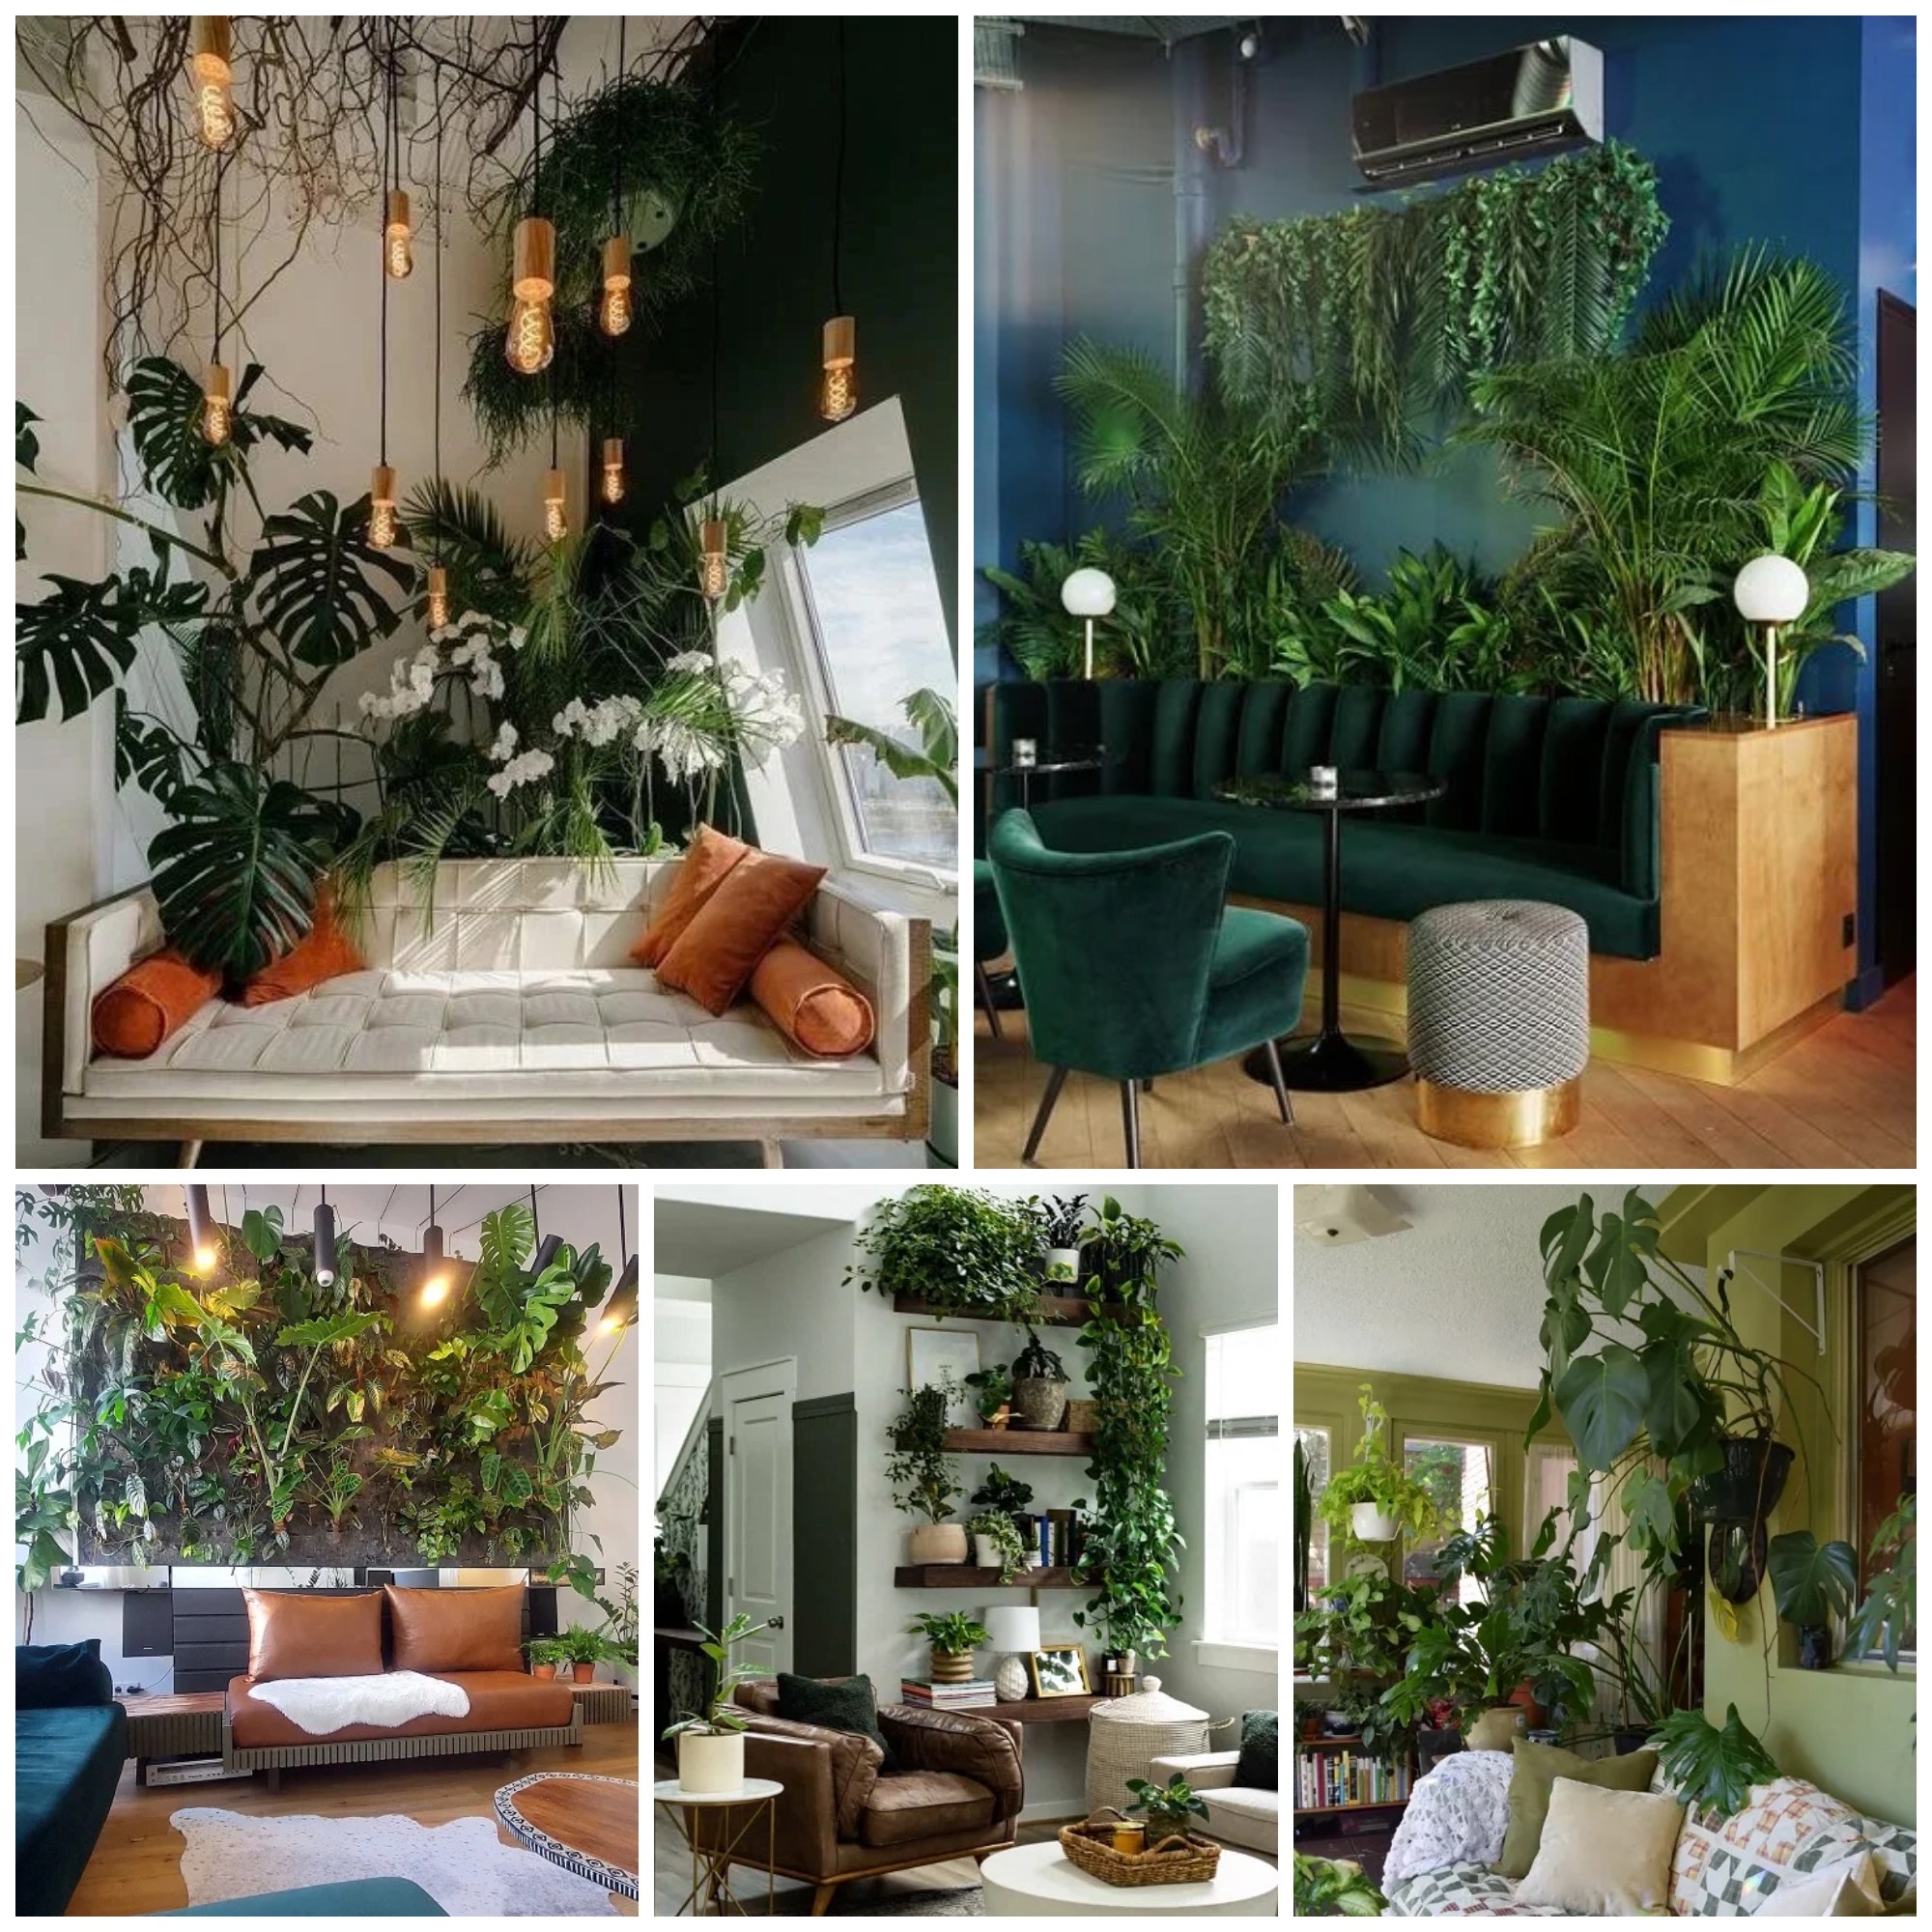 Cozy Wall Behind Sofa Decor Ideas with Plants